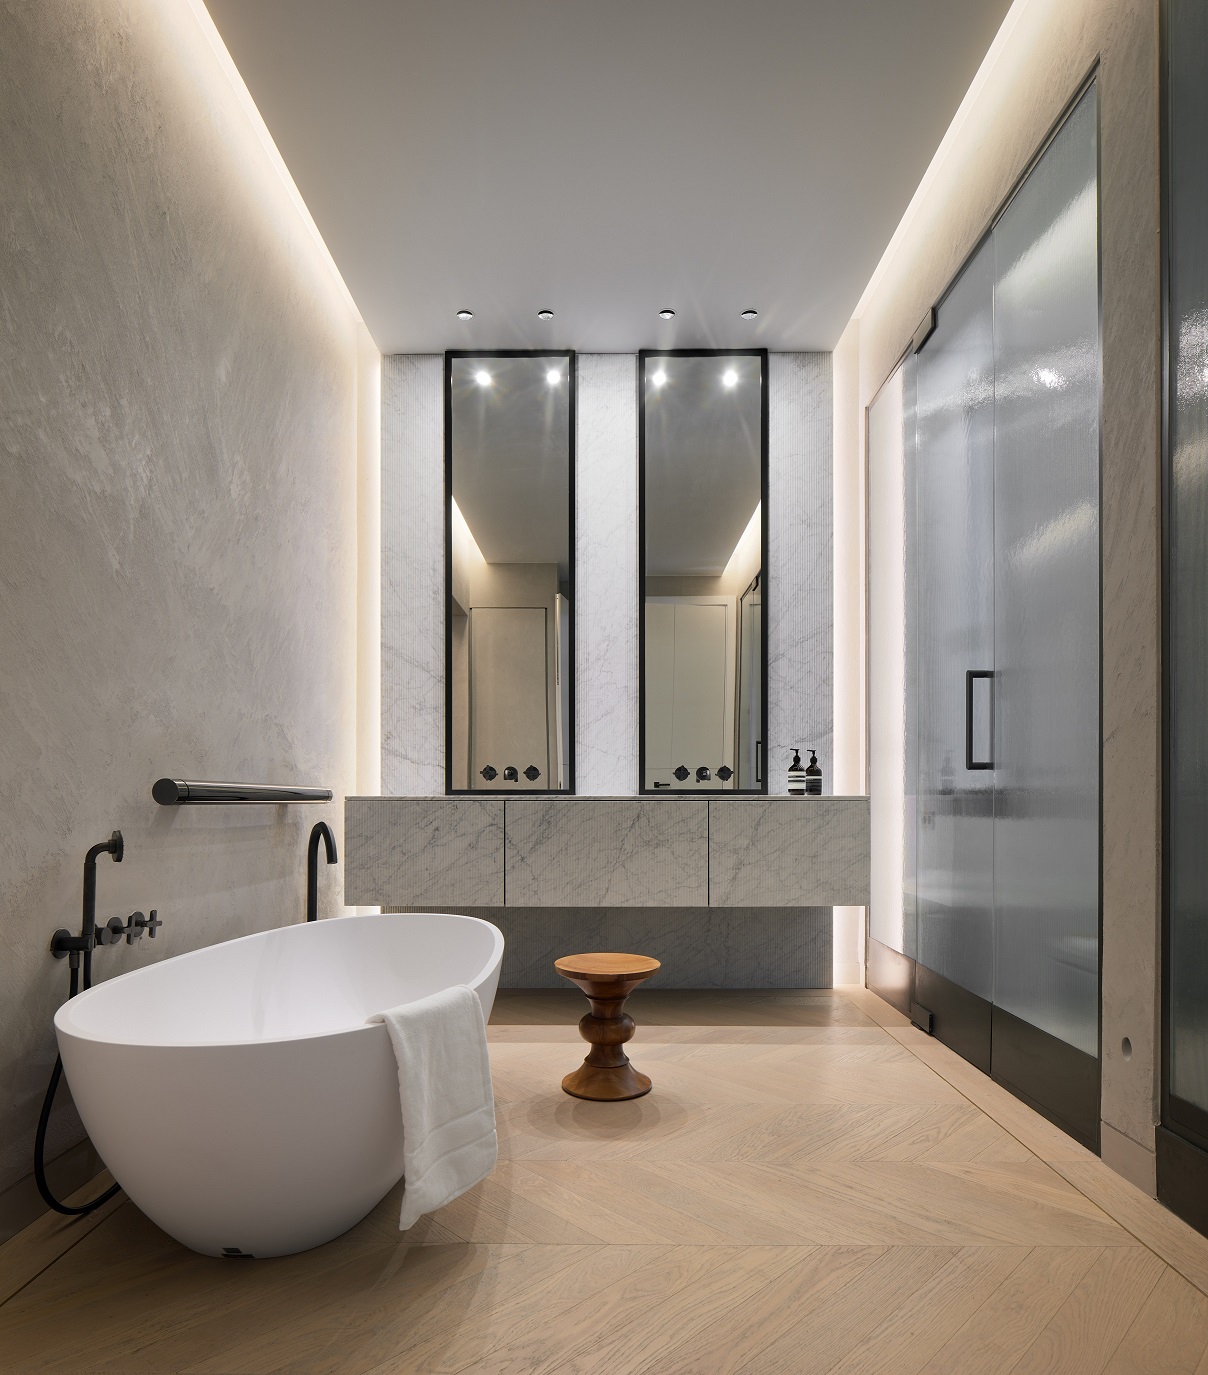 Paseo de Gracia Apartment LUV Studio Pol Viladoms Master Bathroom - LUV Studio - Architecture et design - Barcelone